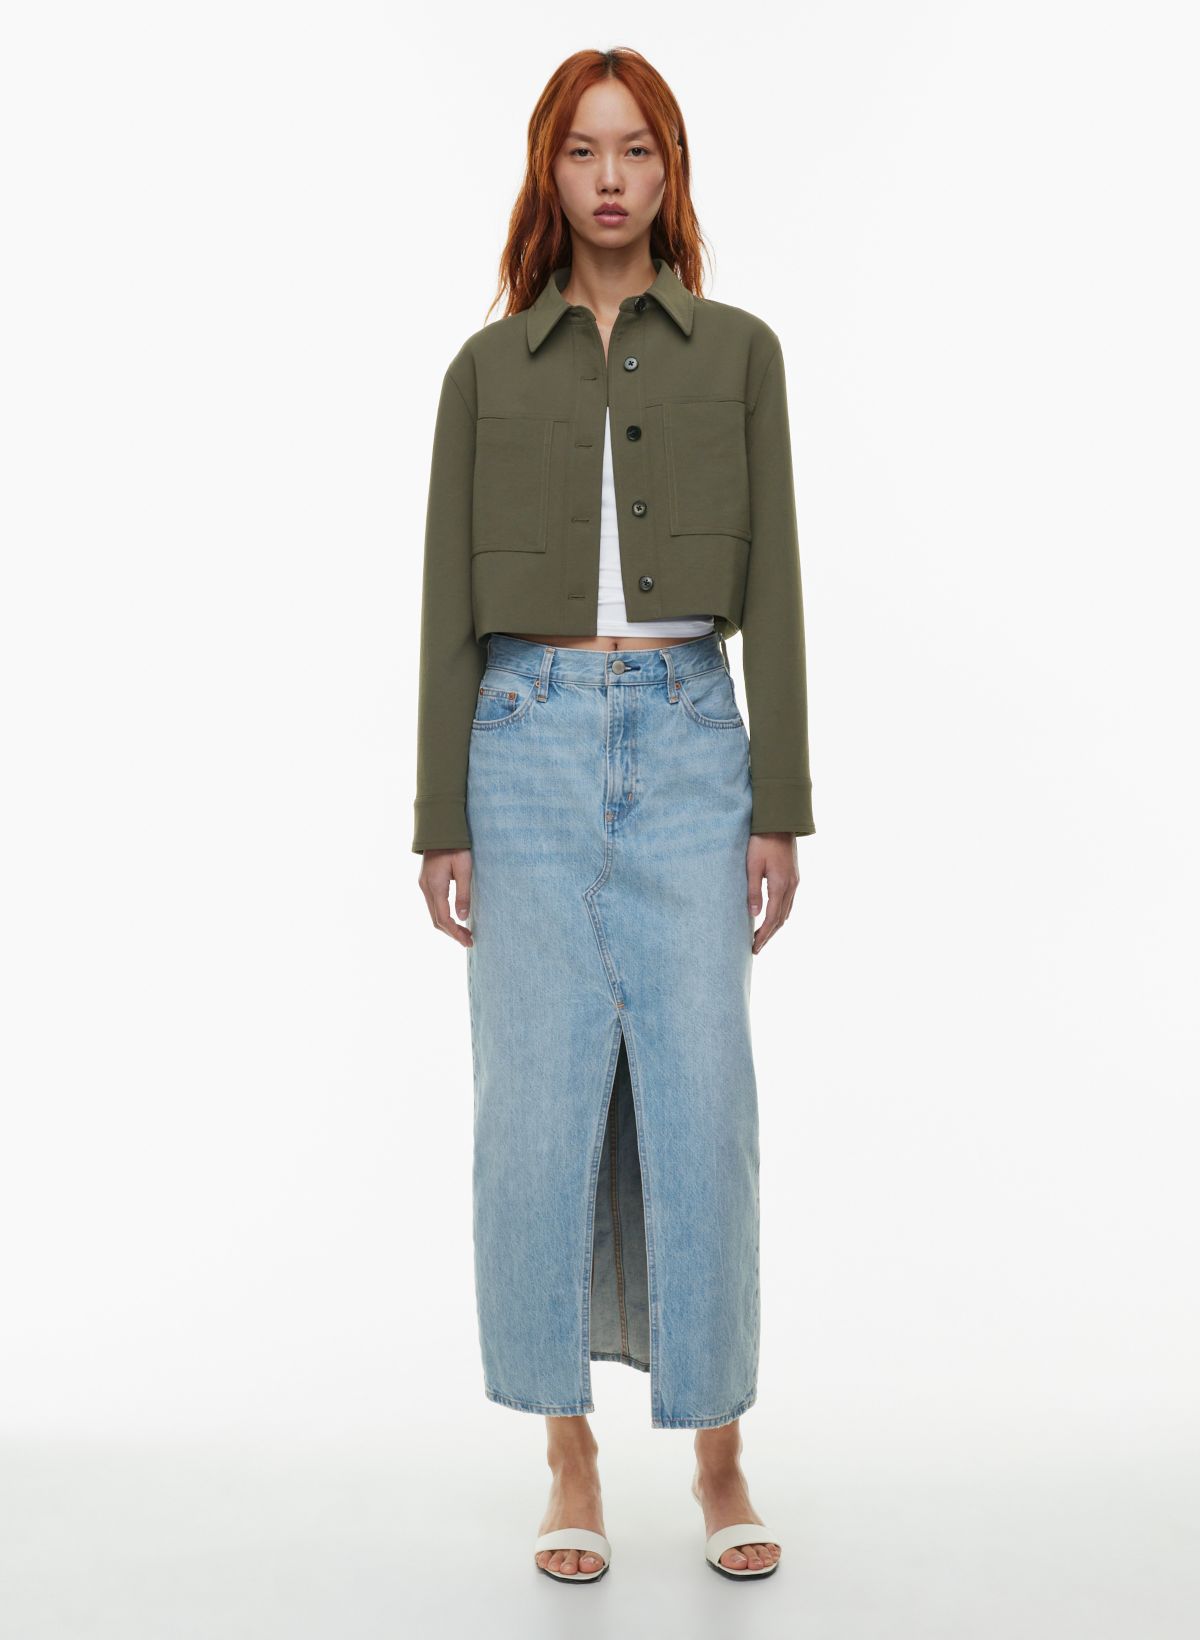 Tailor seamless shorts in Khaki Green – Sara Patricia Collection